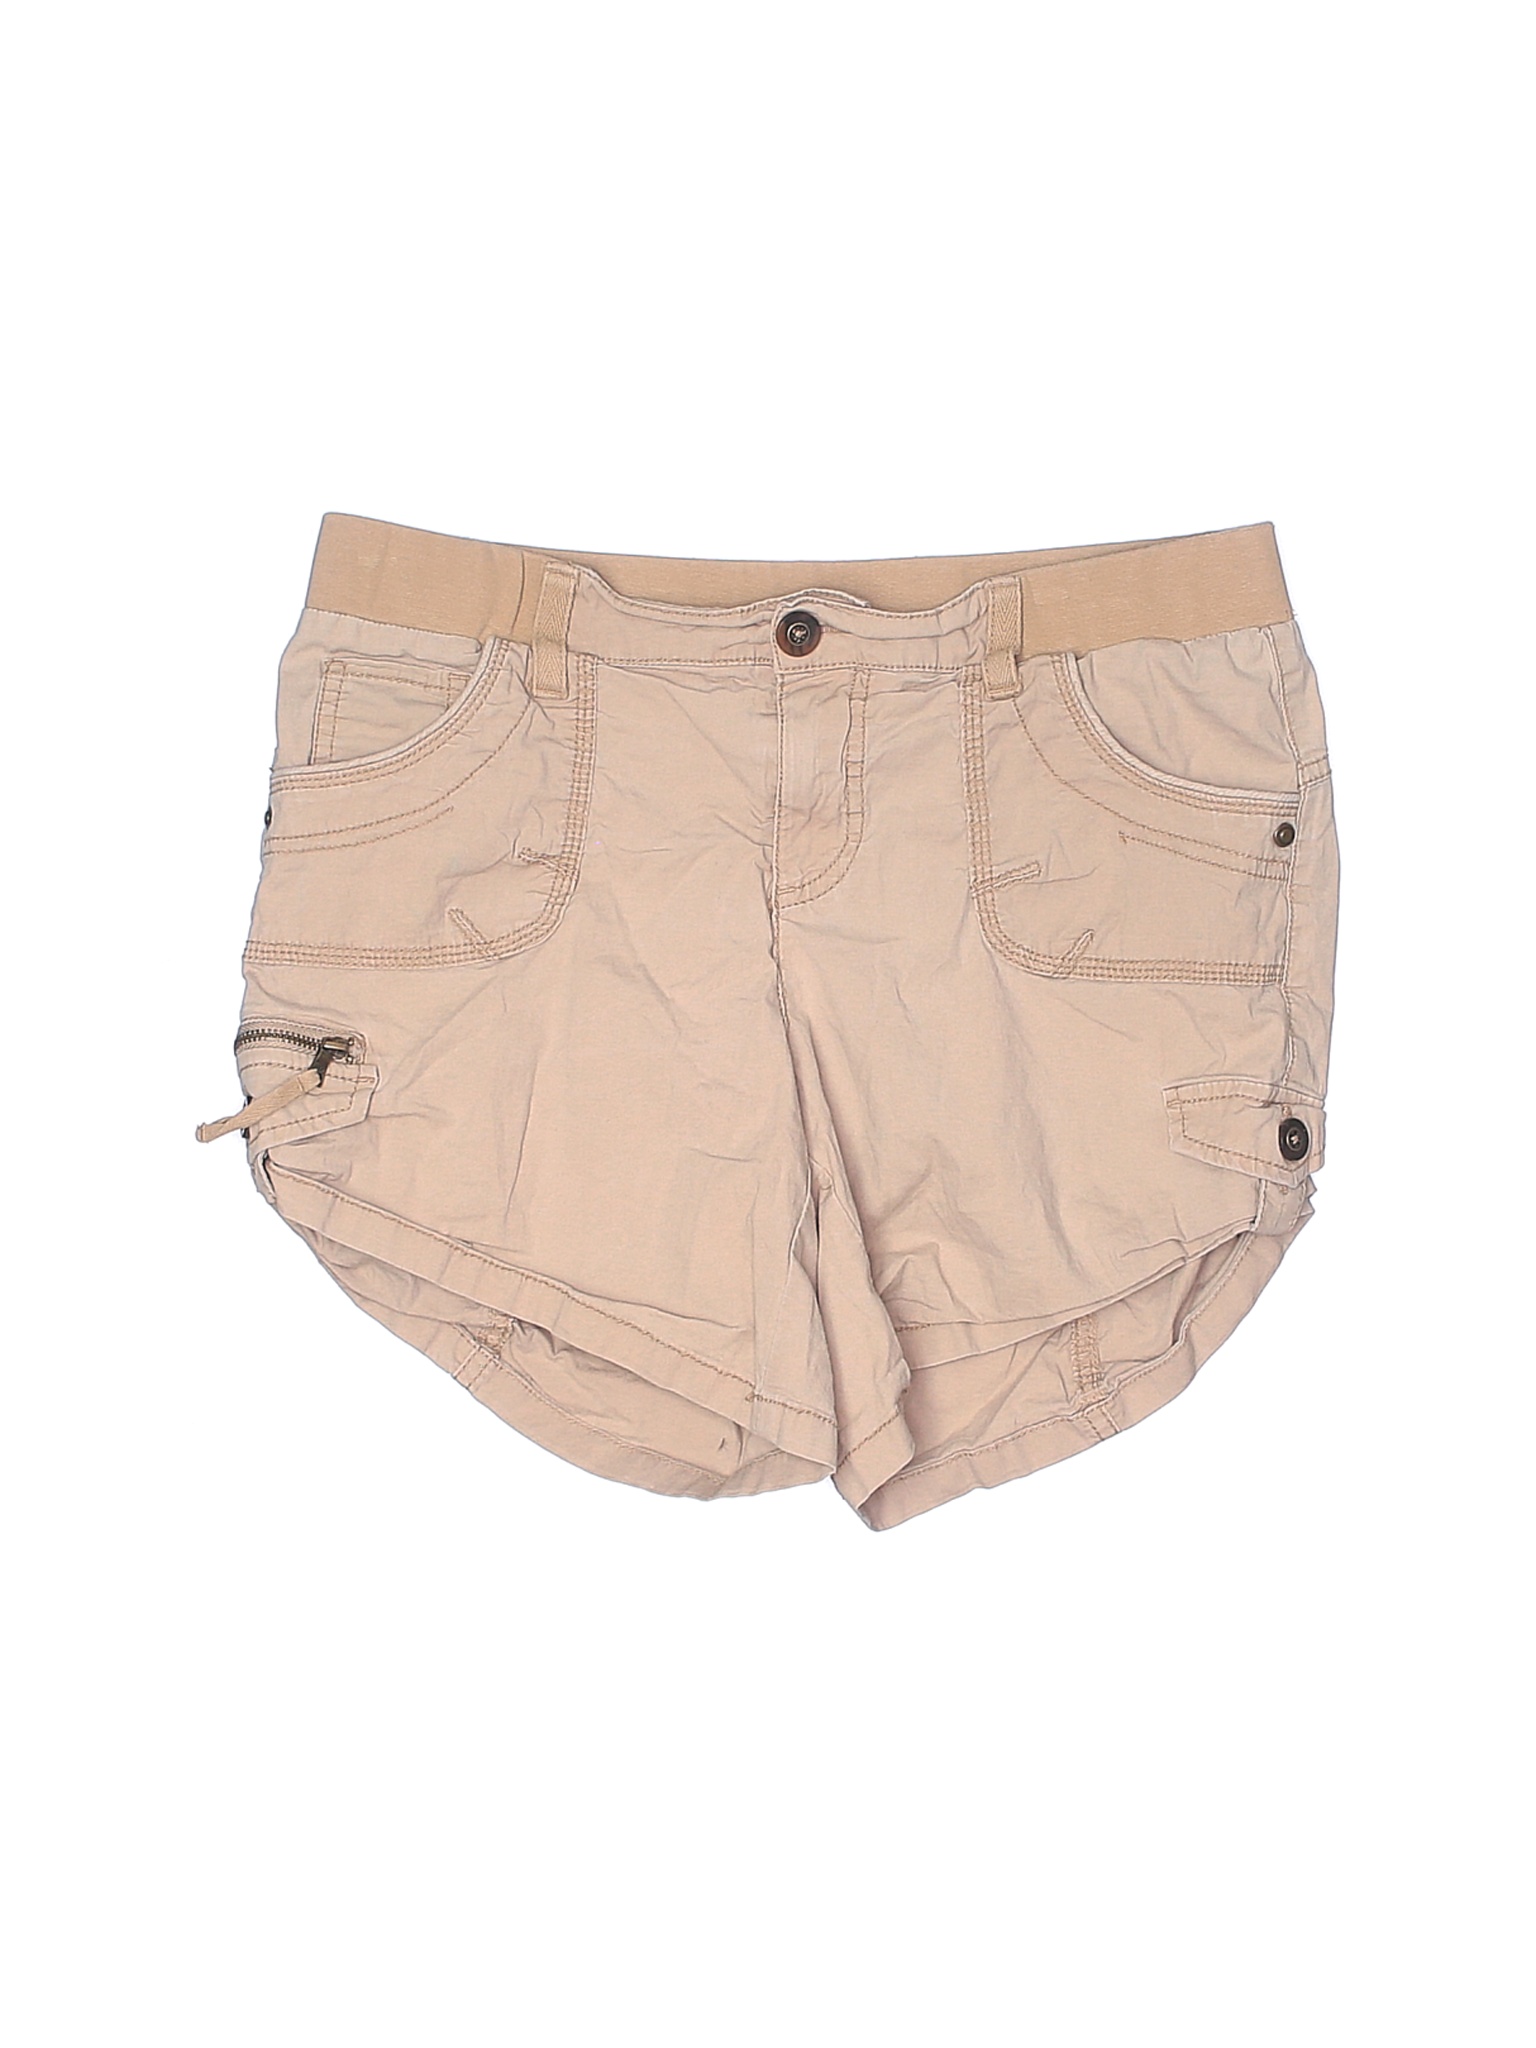 Maurices Women Brown Khaki Shorts 6 | eBay